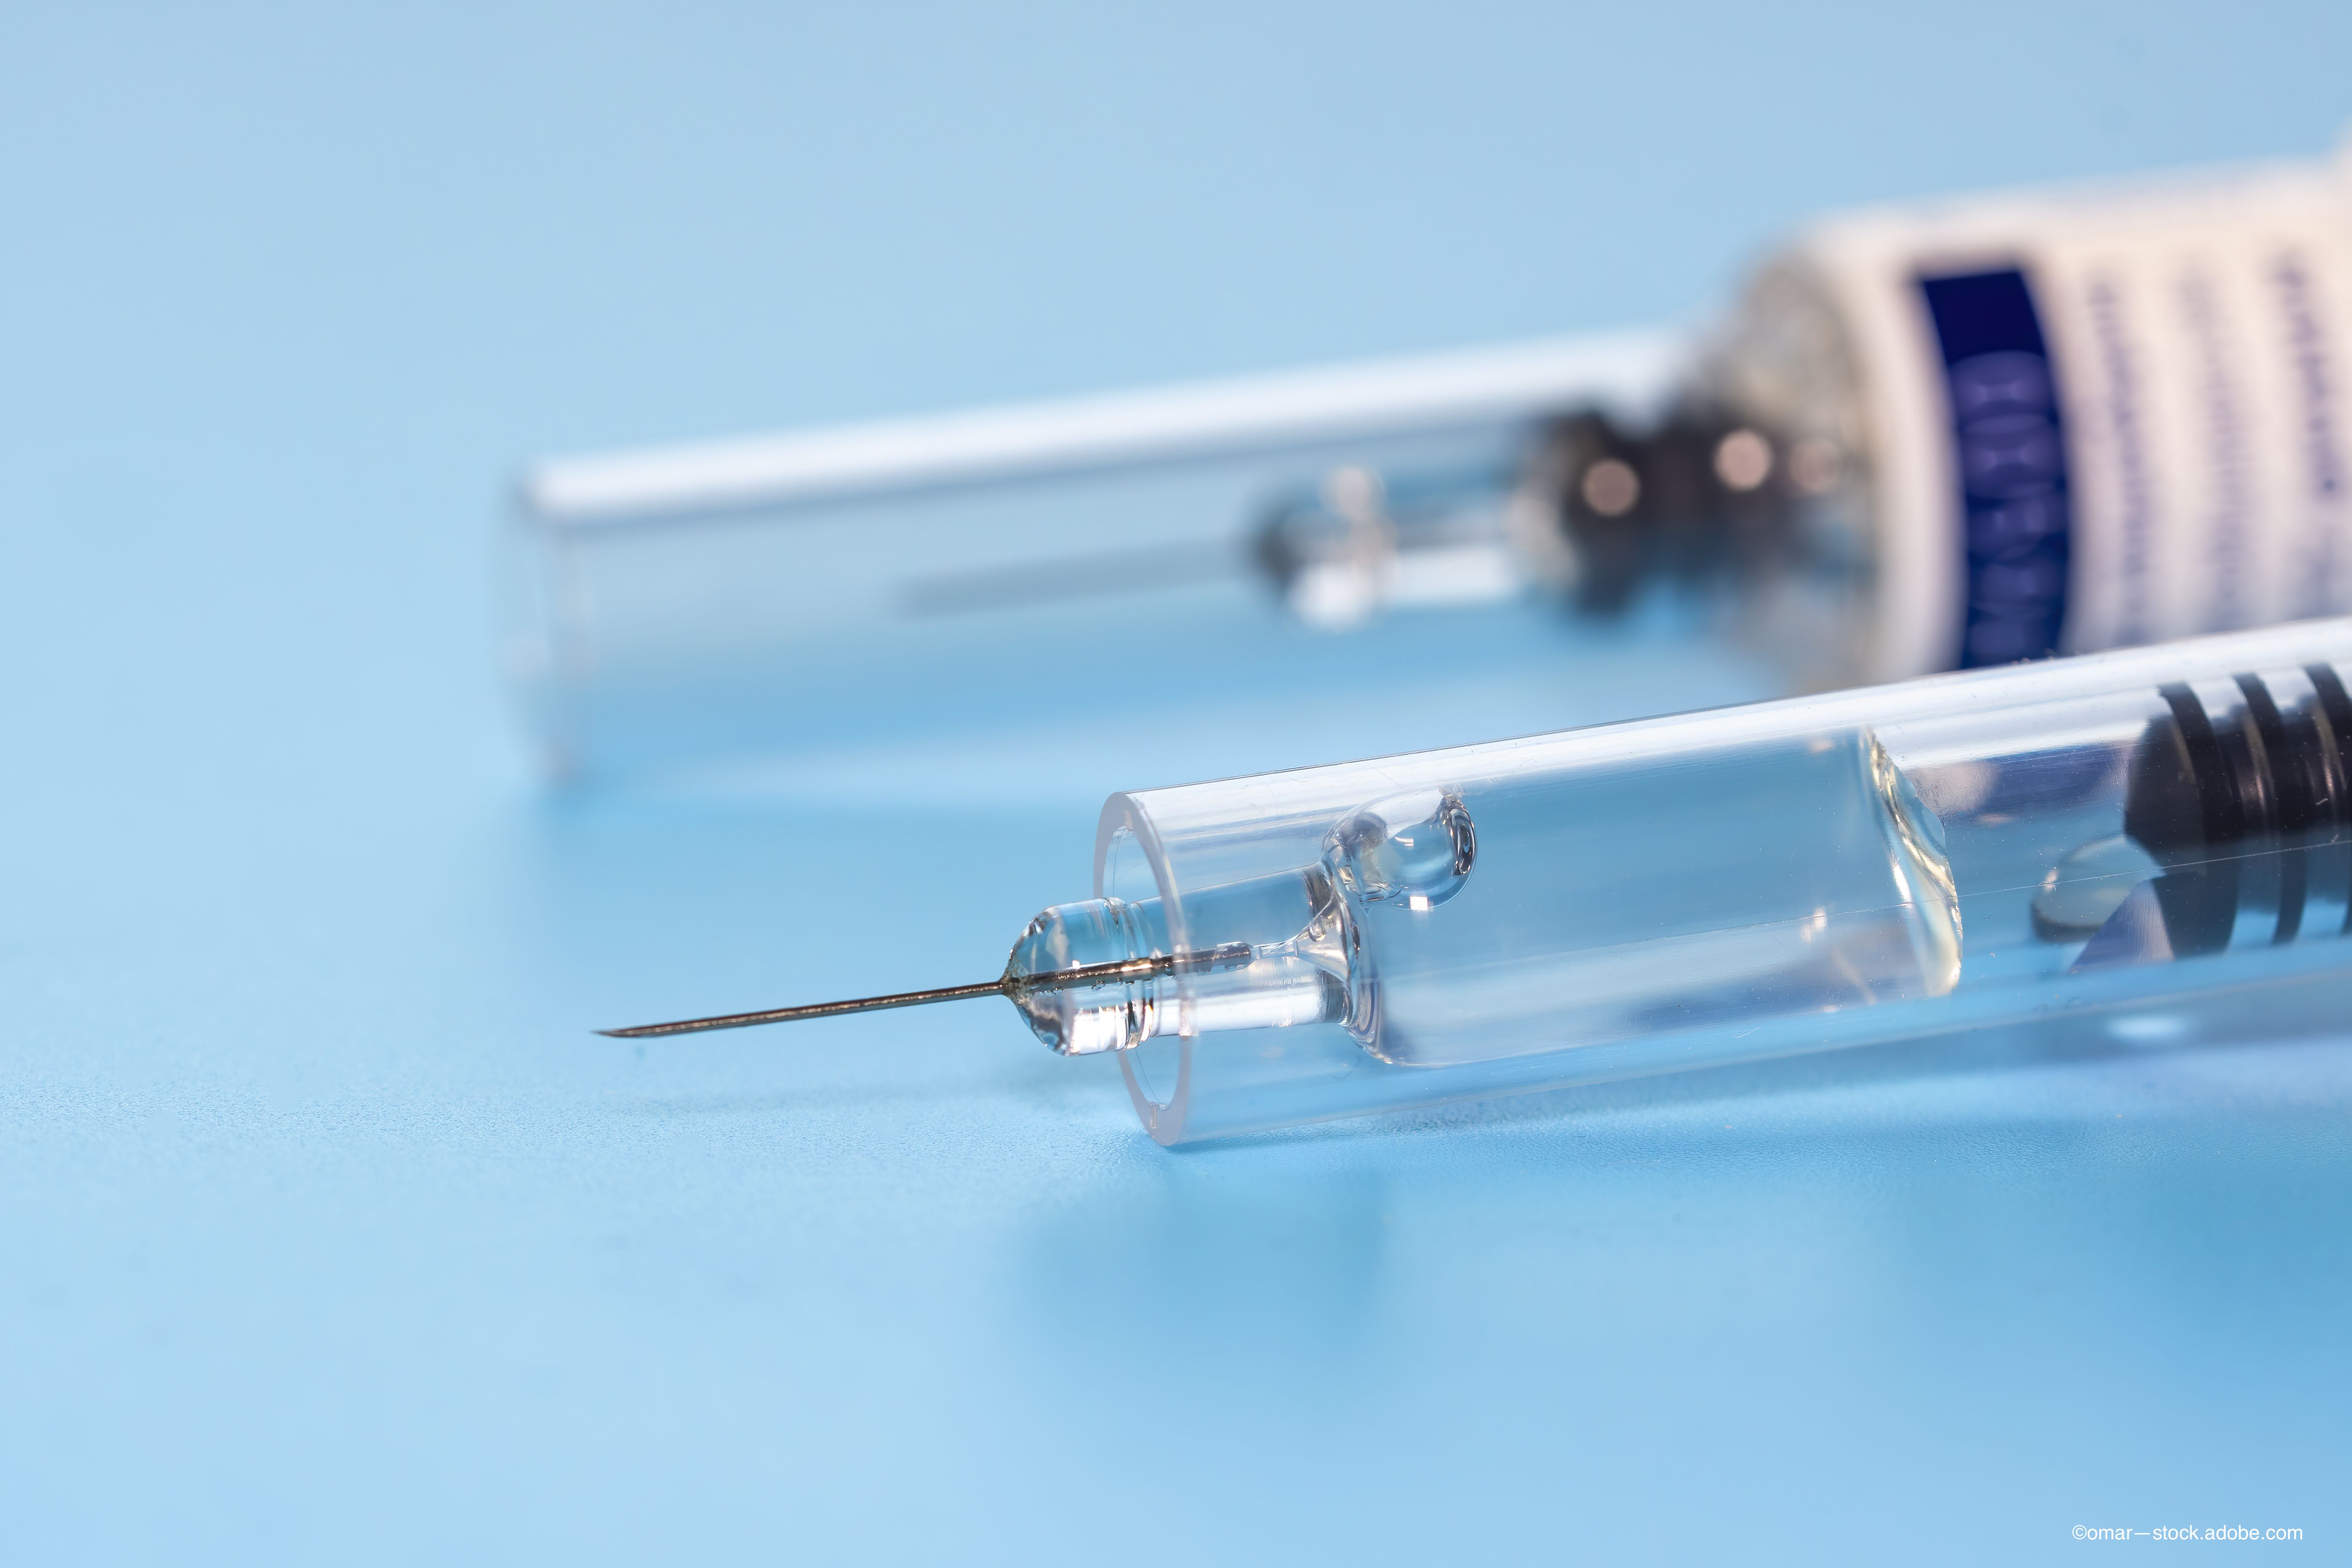 Dosing variability with pre-filled syringes of aflibercept presents risk of overdose